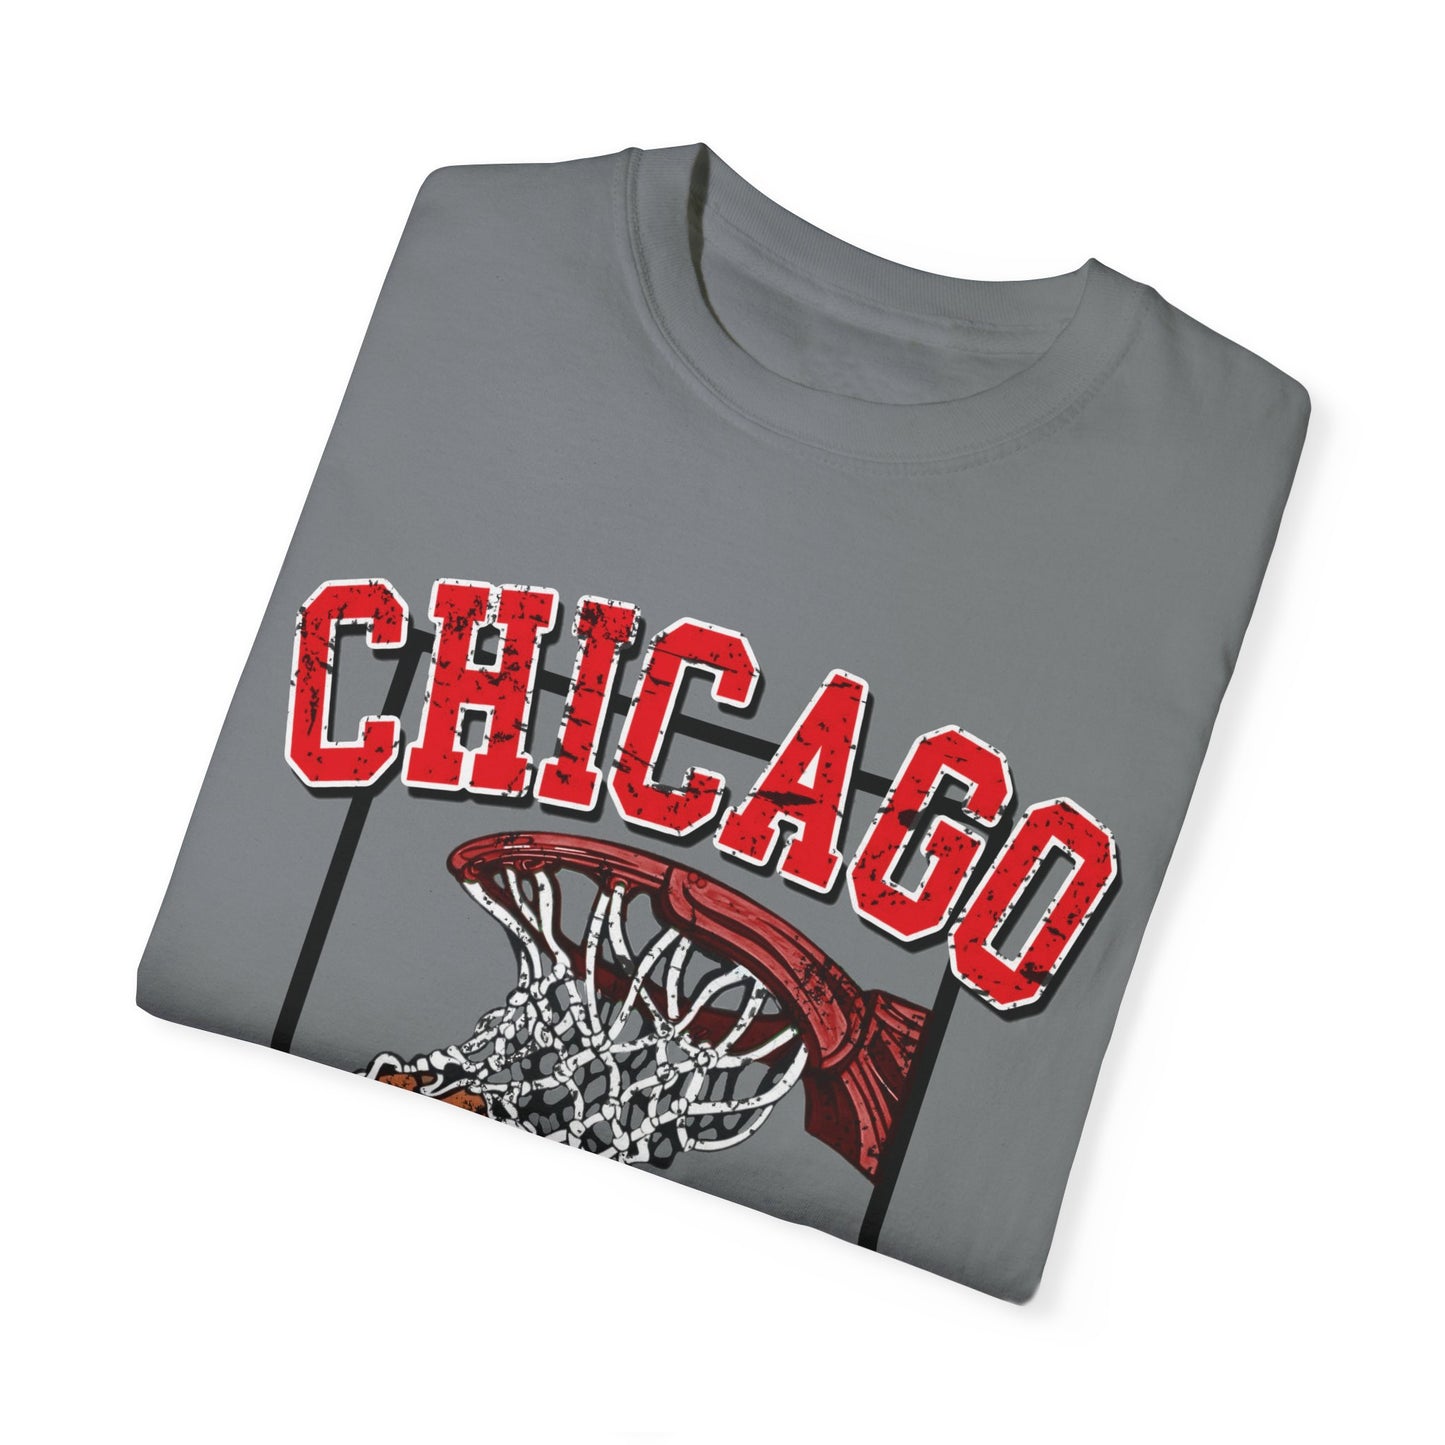 Chicago Bulls Basketball Tshirt